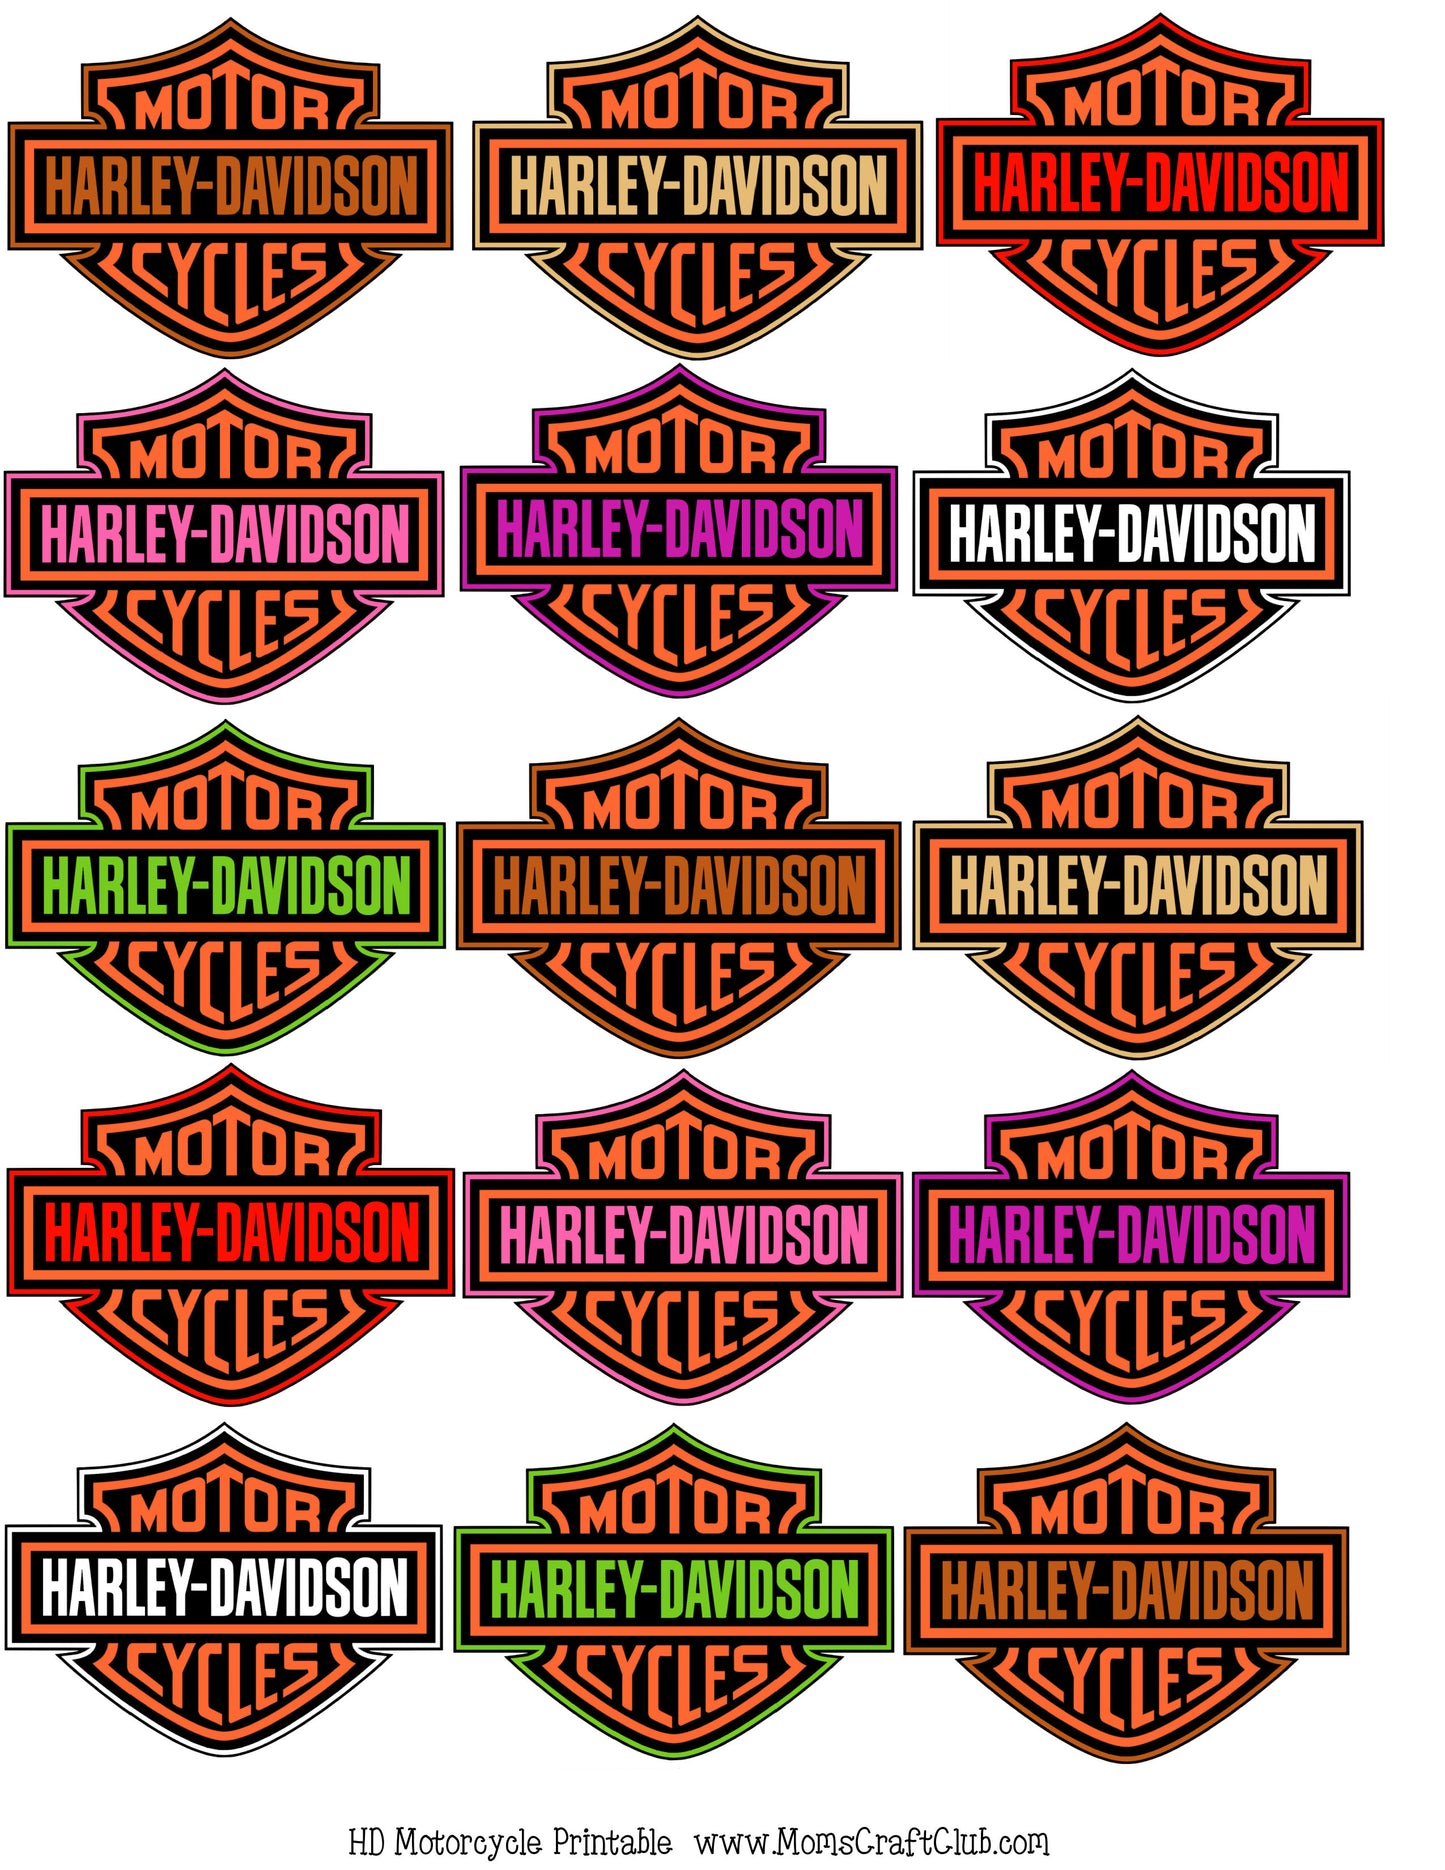 HD Harley Davidson Motorcycle tags Printable All Colors - make tags, ornaments, badges